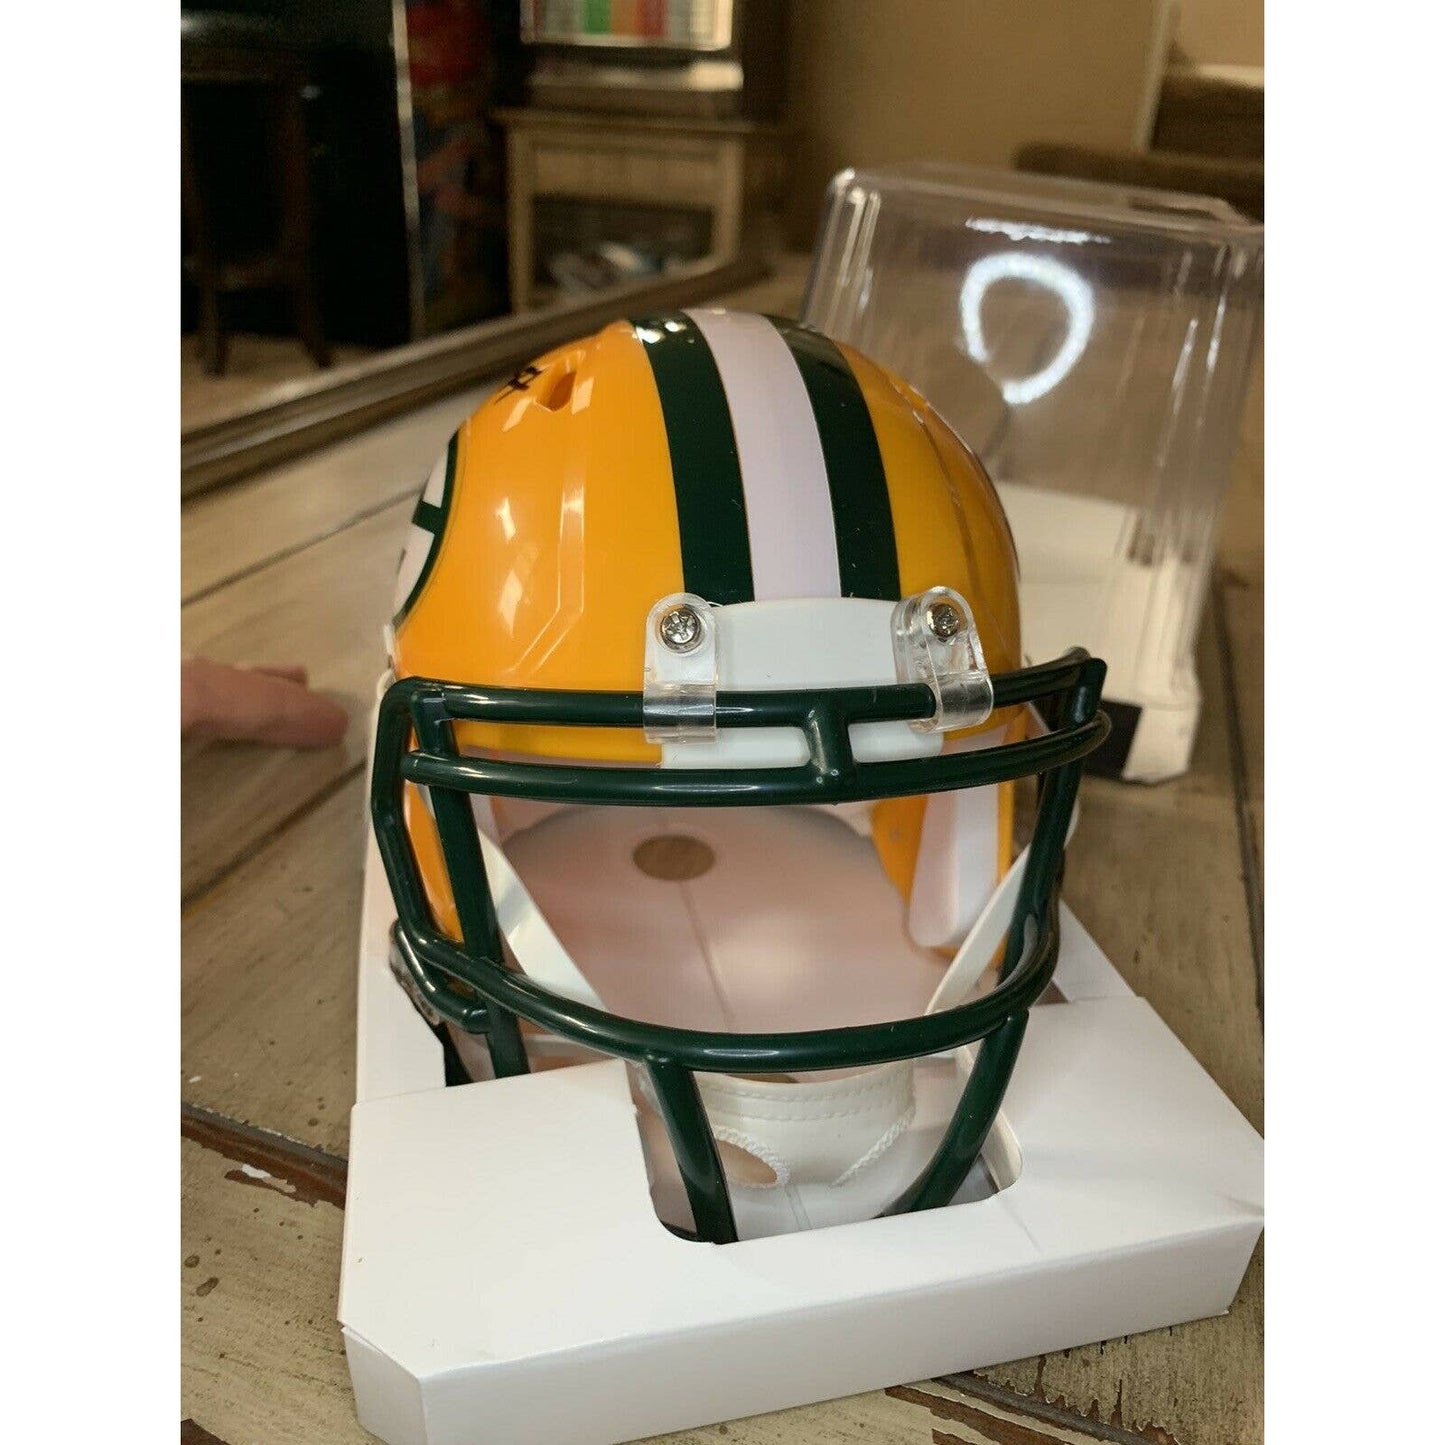 Jace Sternberger Autographed/Signed Mini Helmet Beckett COA Green Bay Packers C - TreasuresEvolved